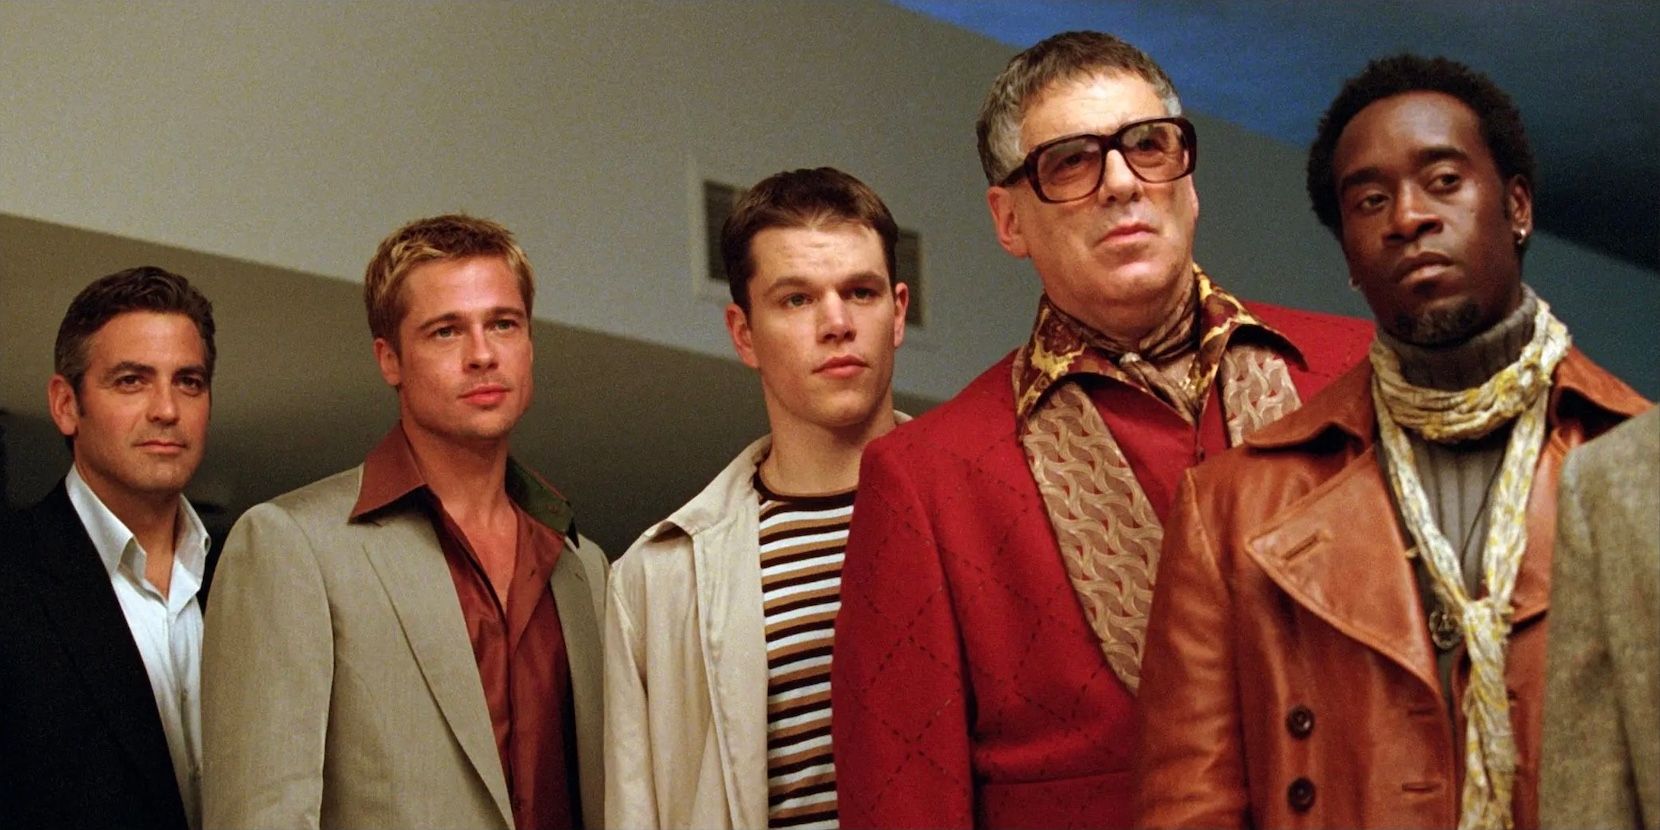 George Clooney, Brad Pitt, Matt Damon and the rest of the crew in Ocean's Eleven